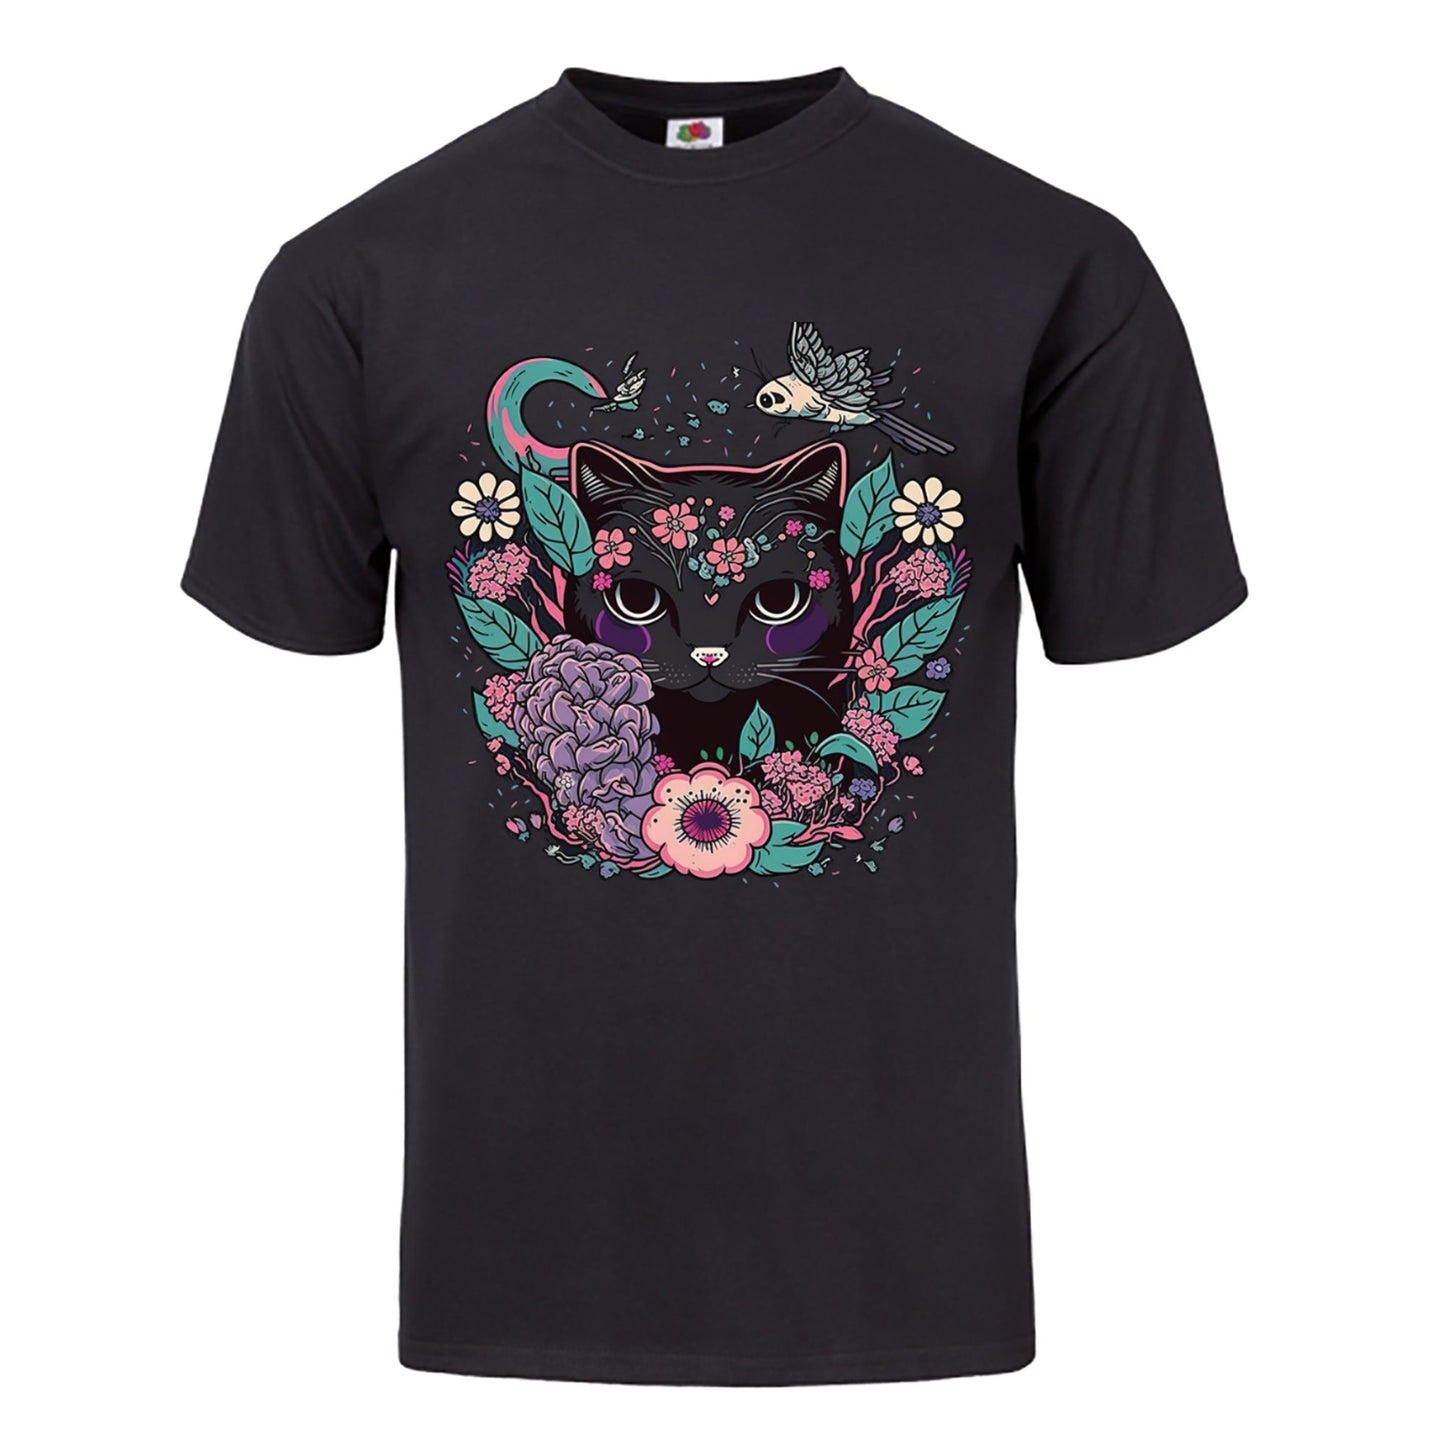 Floral Kitty Tee Shirt - Hypno Monkey